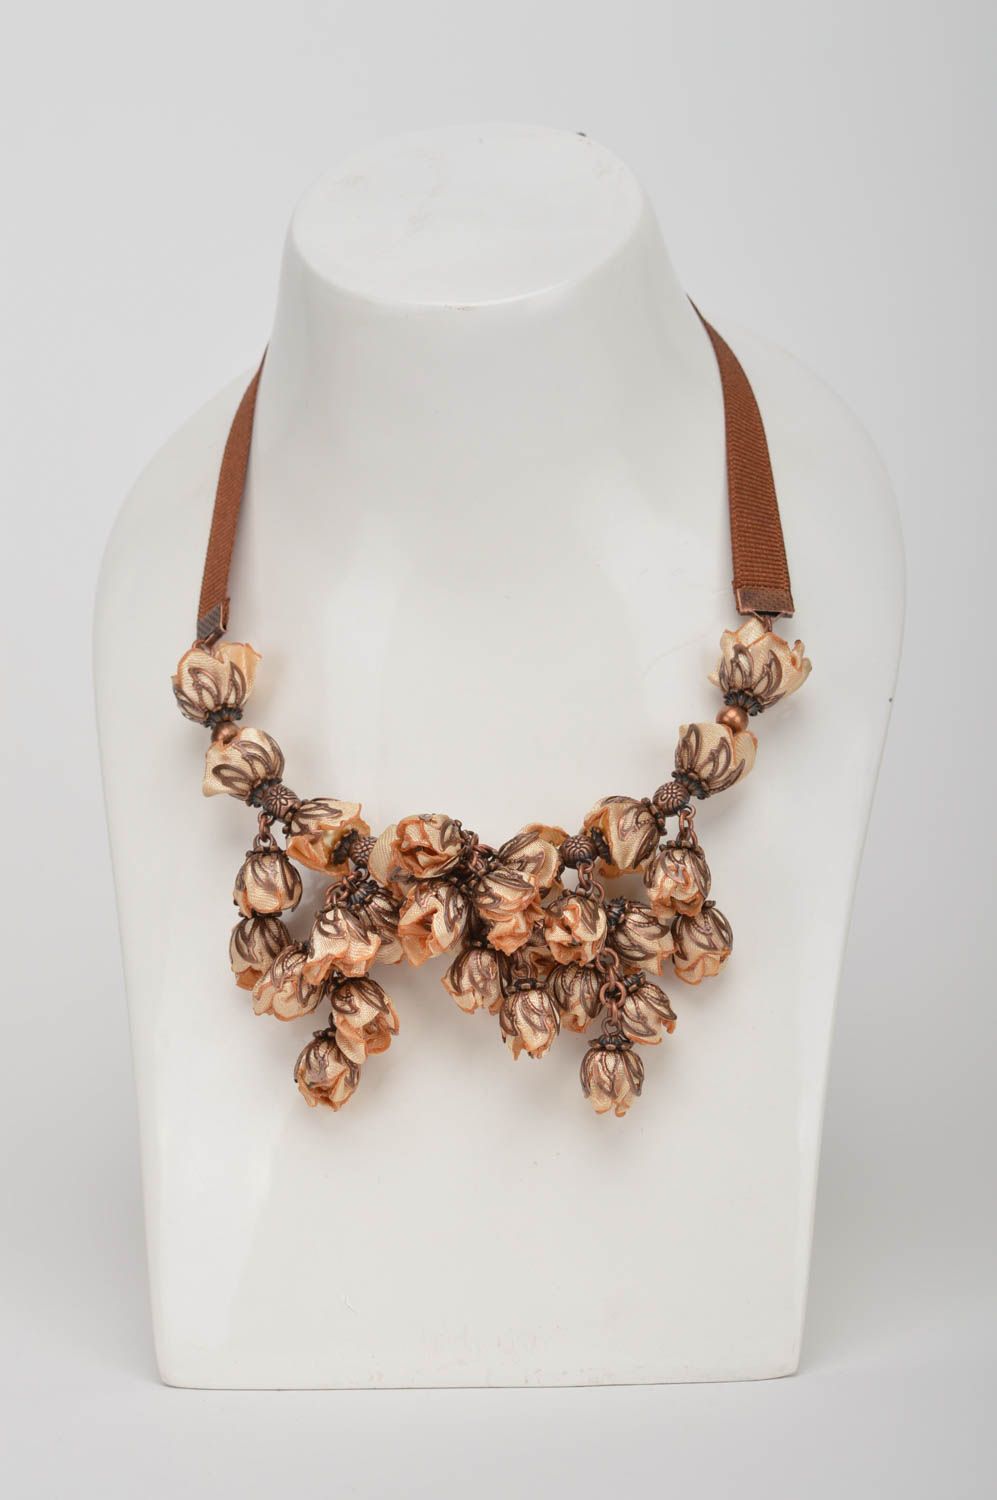 Massive stylish necklace handmade beautiful accessories designer jewelry photo 1